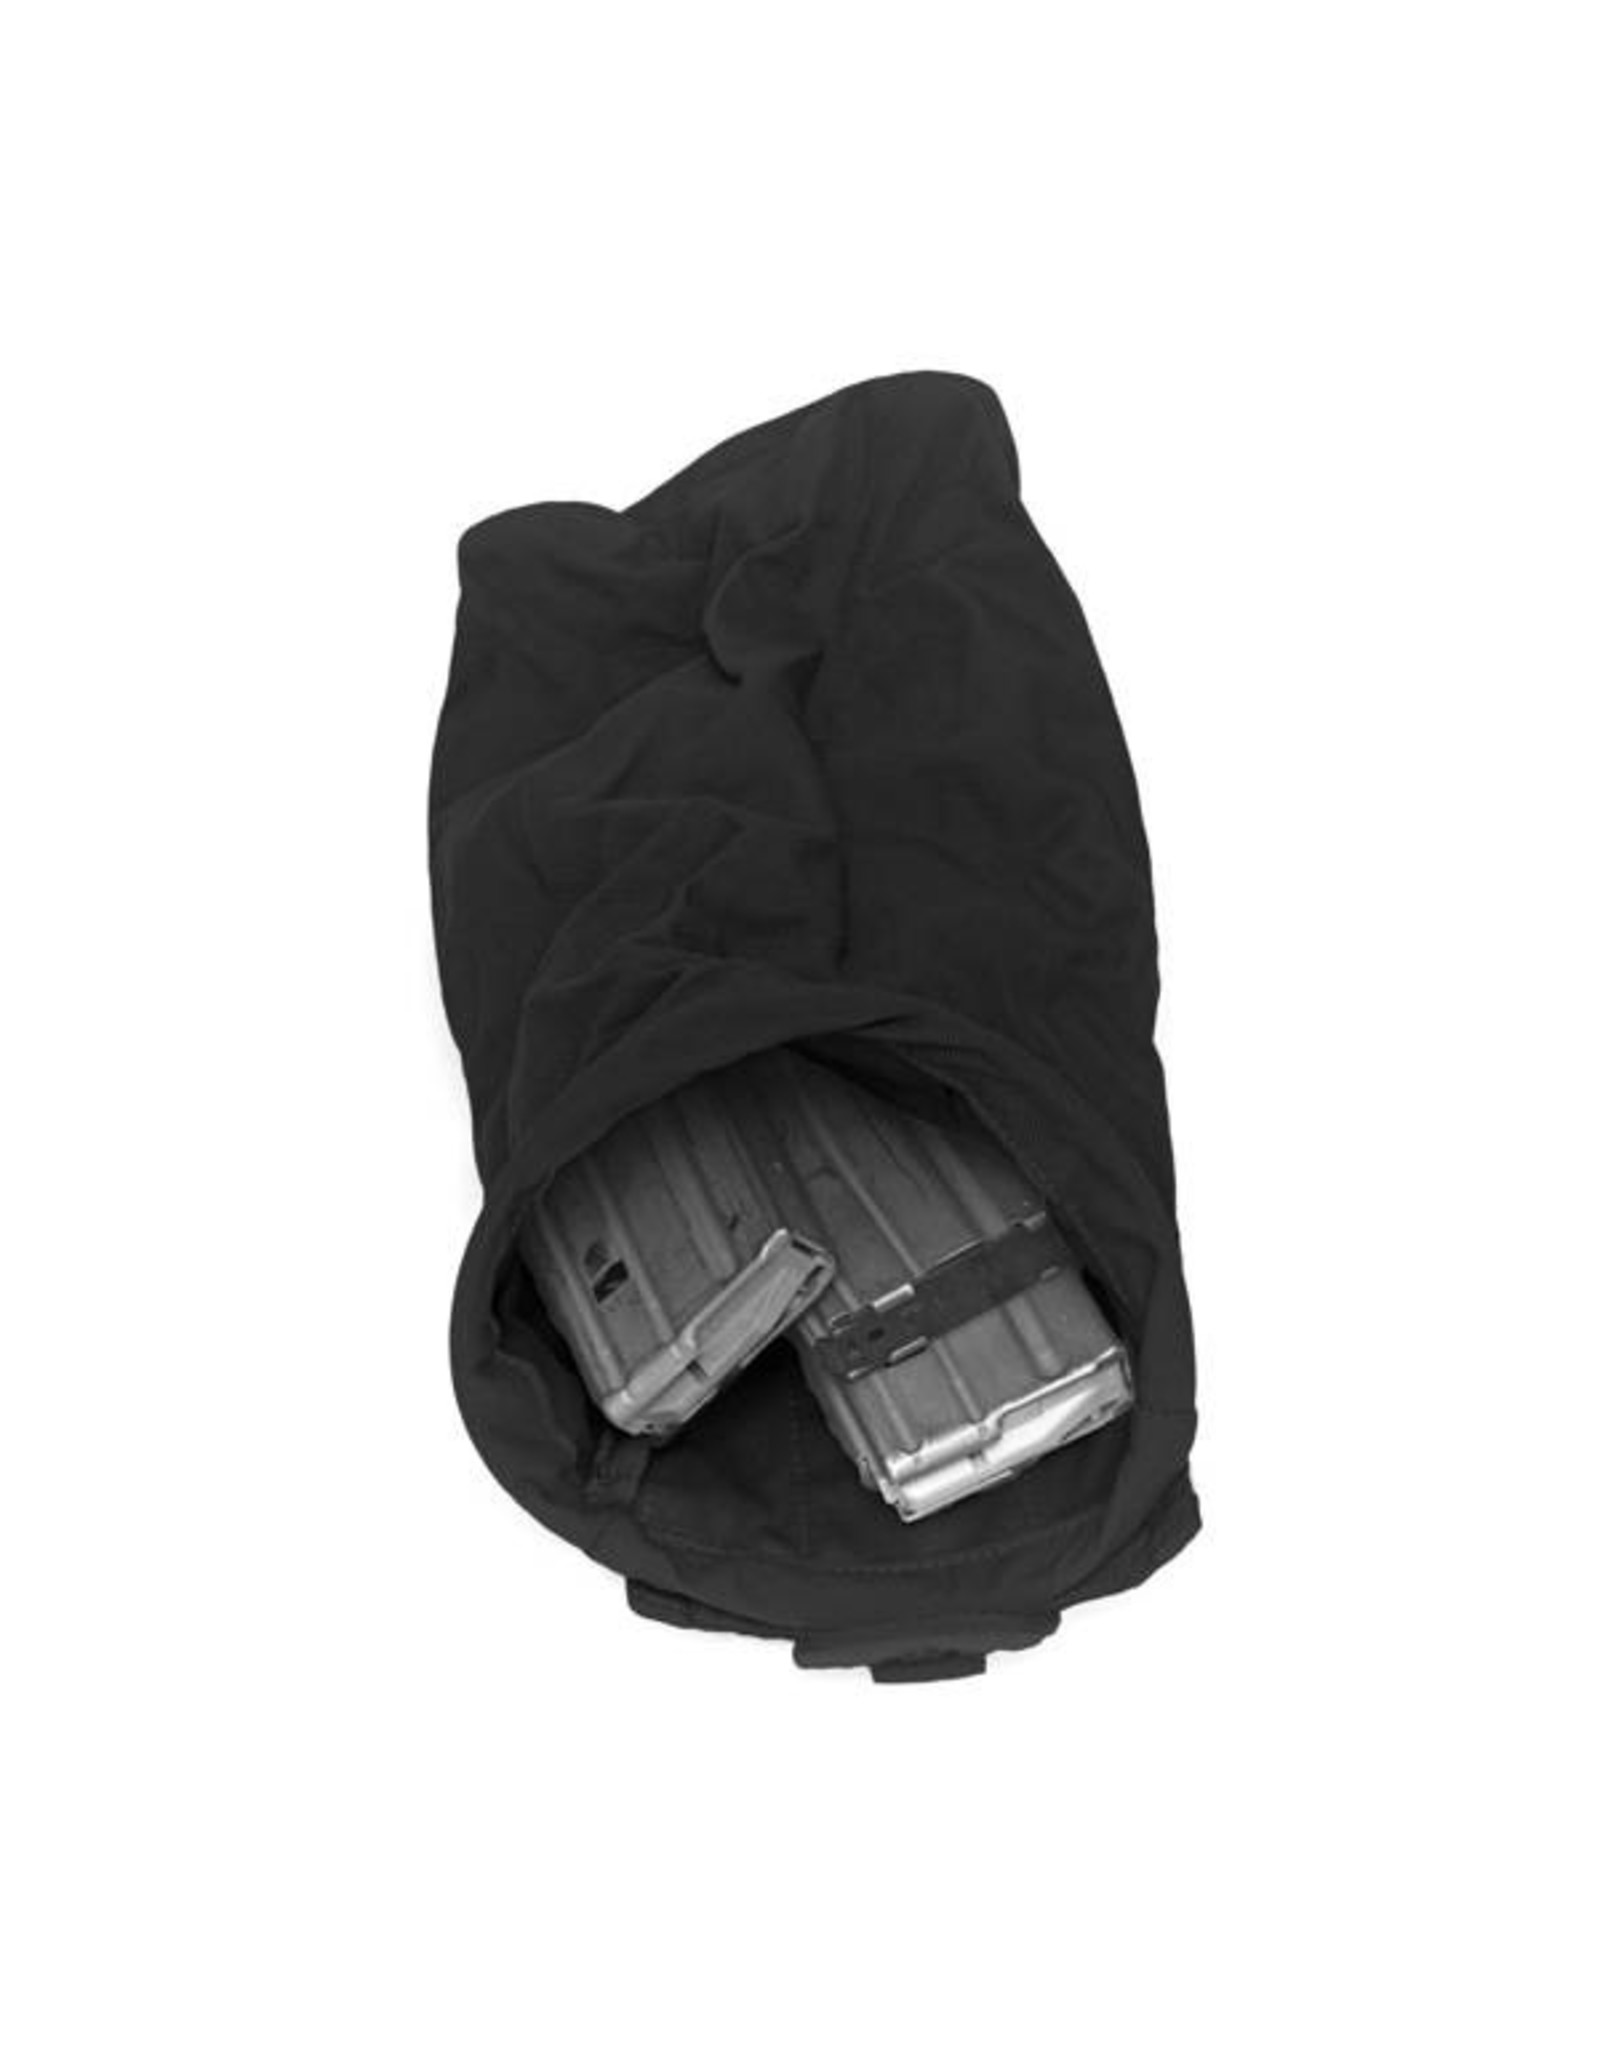 Warrior Slimline Foldable Dump Pouch - Black